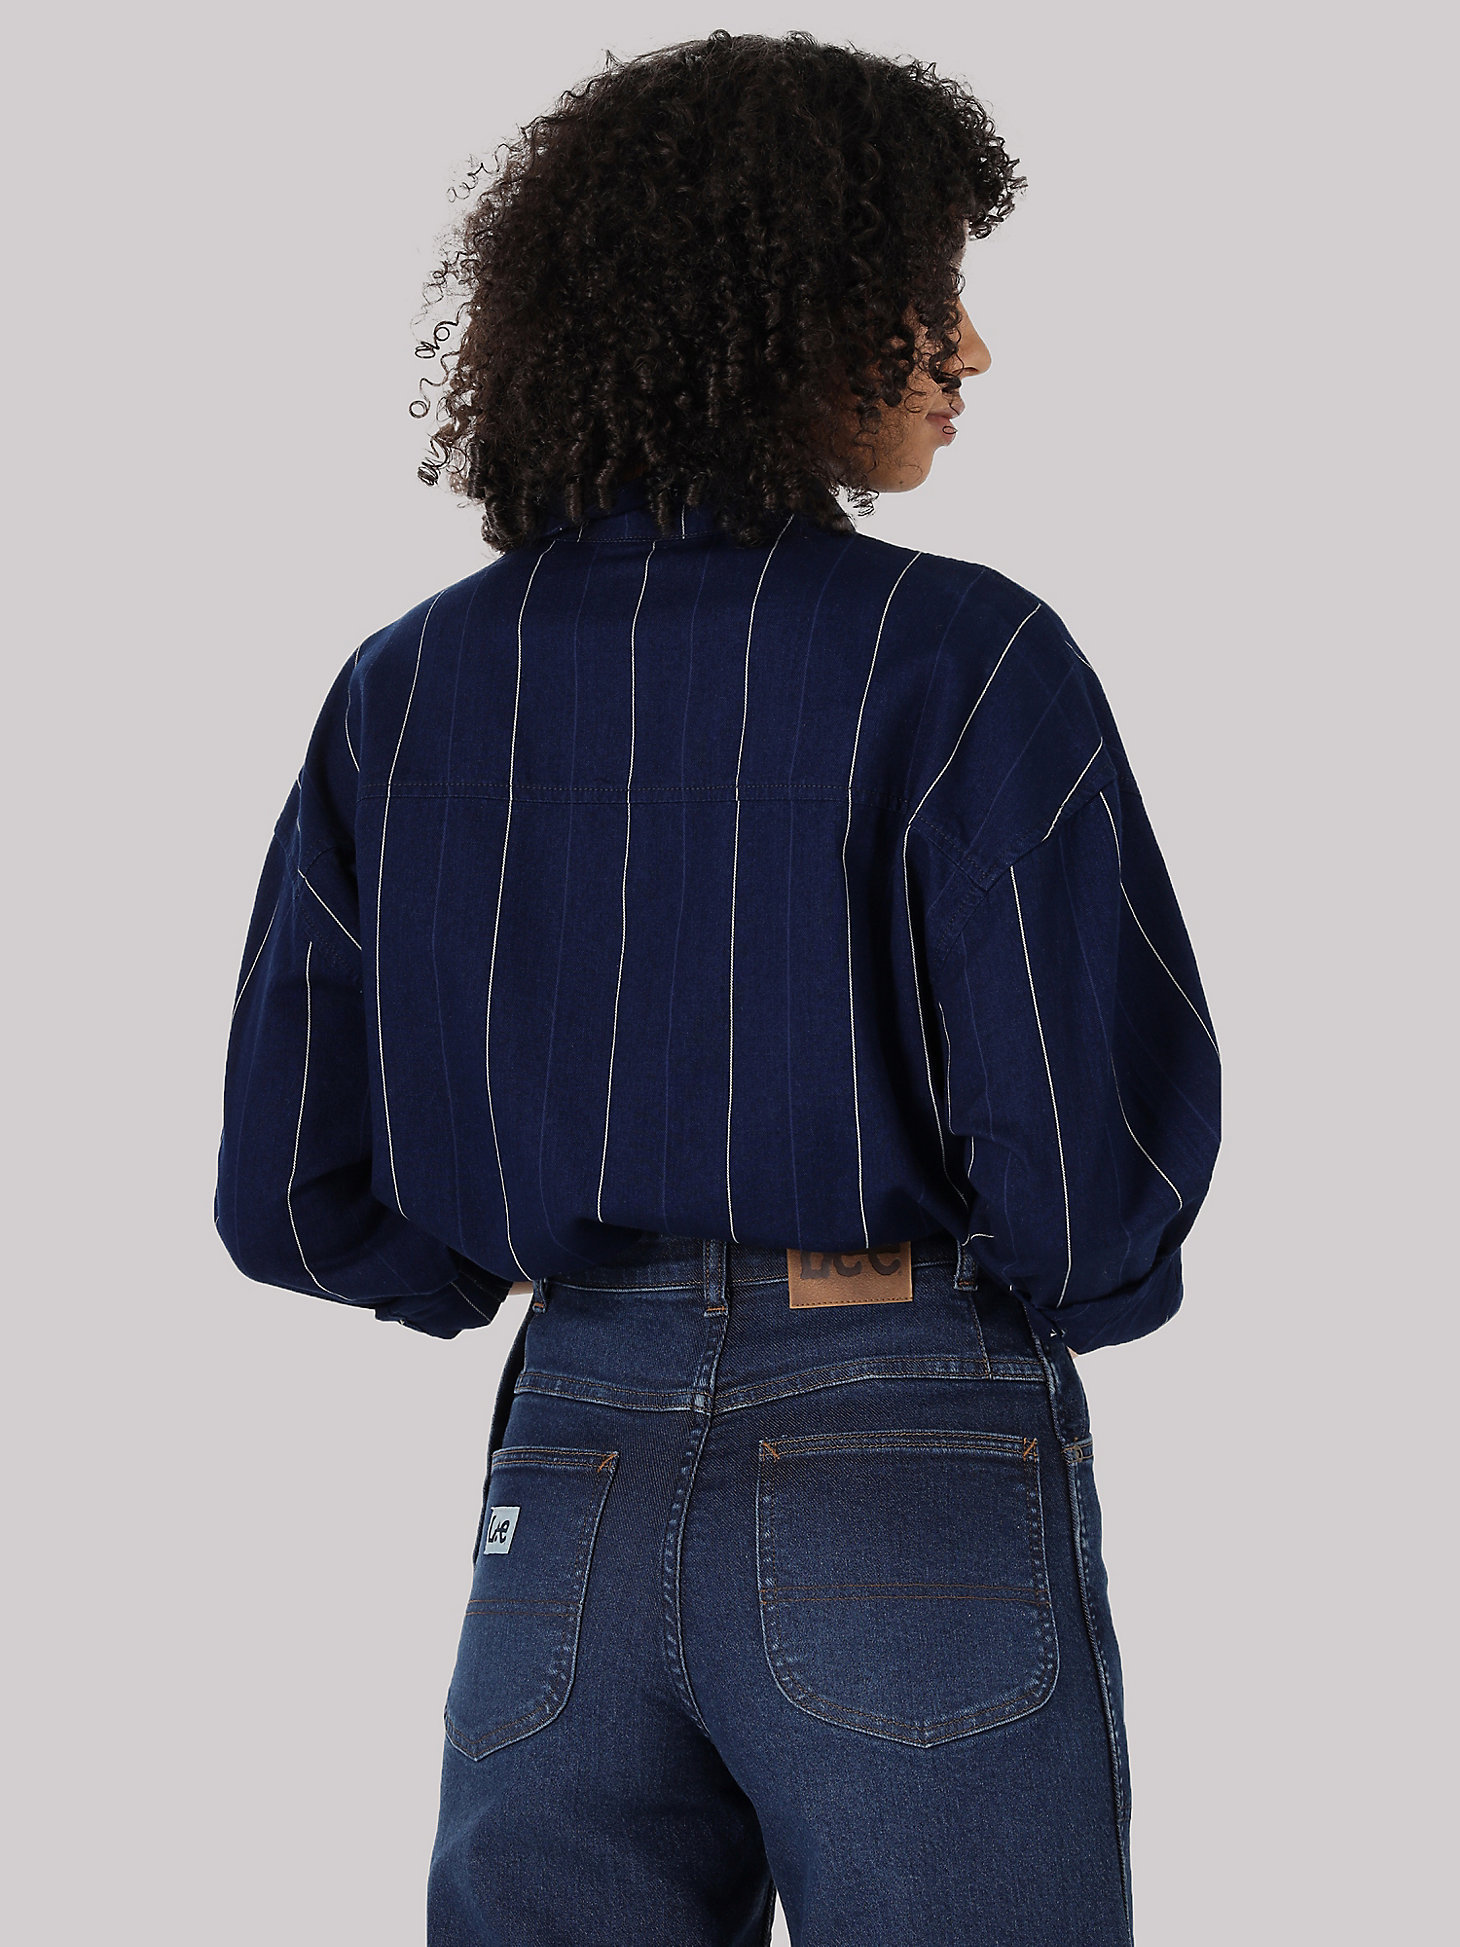 Women's Heritage Frontier Stripe Button Down Shirt in Blue Stripe alternative view 1